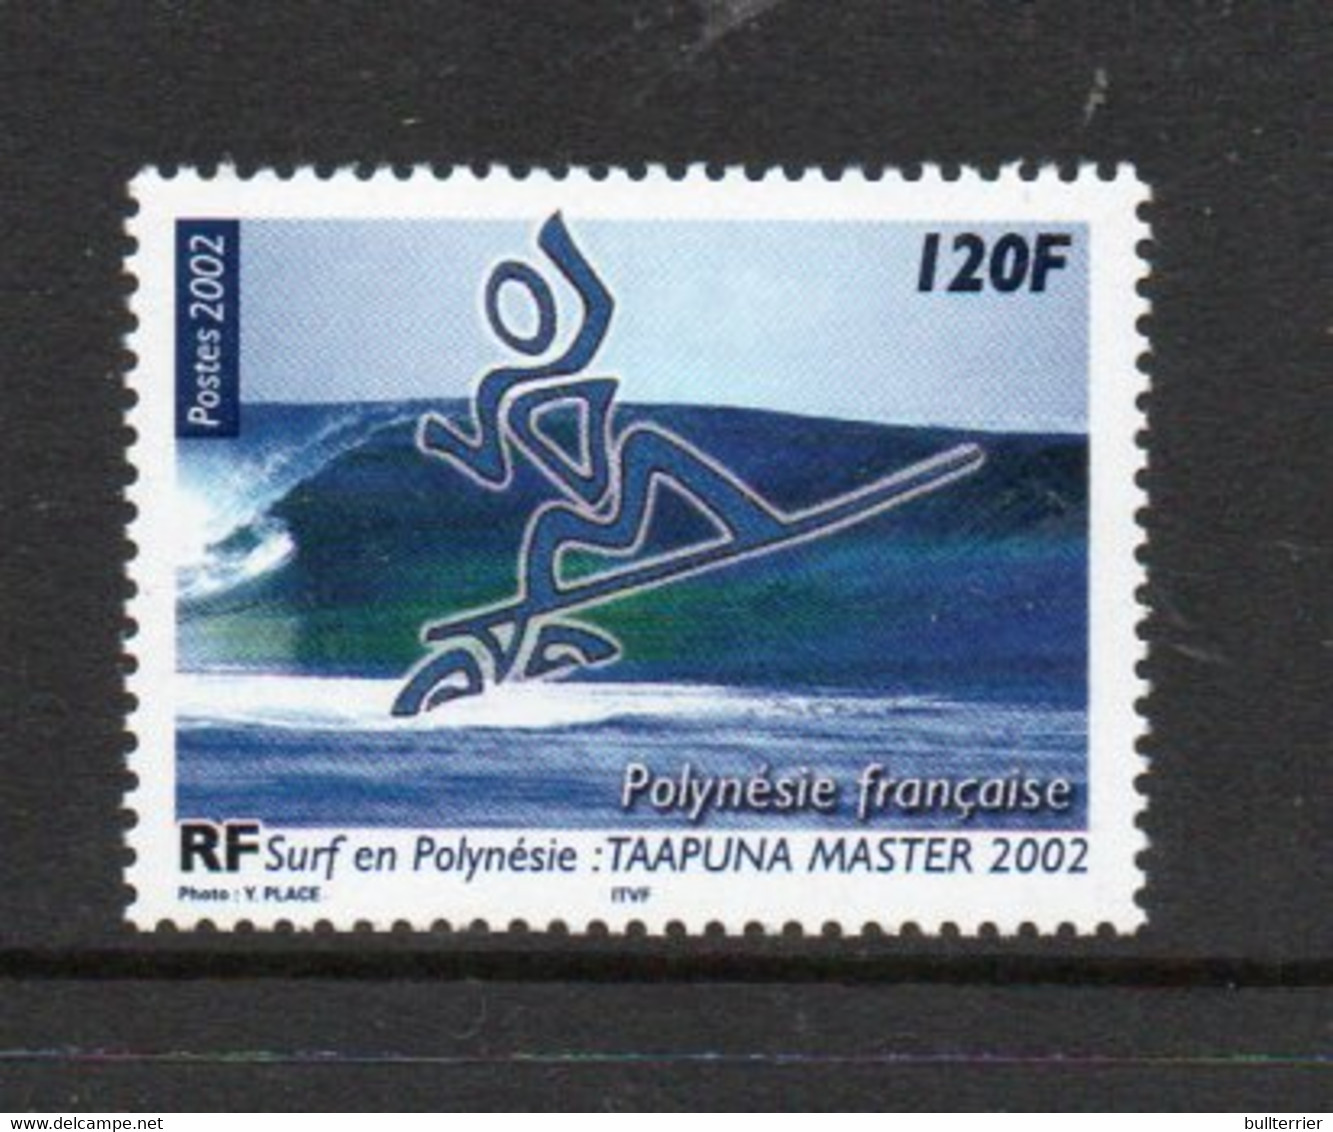 SURFING  - POLYNESIA - 2002 - SURFING  MINT NEVER HINGED - Ski Nautique